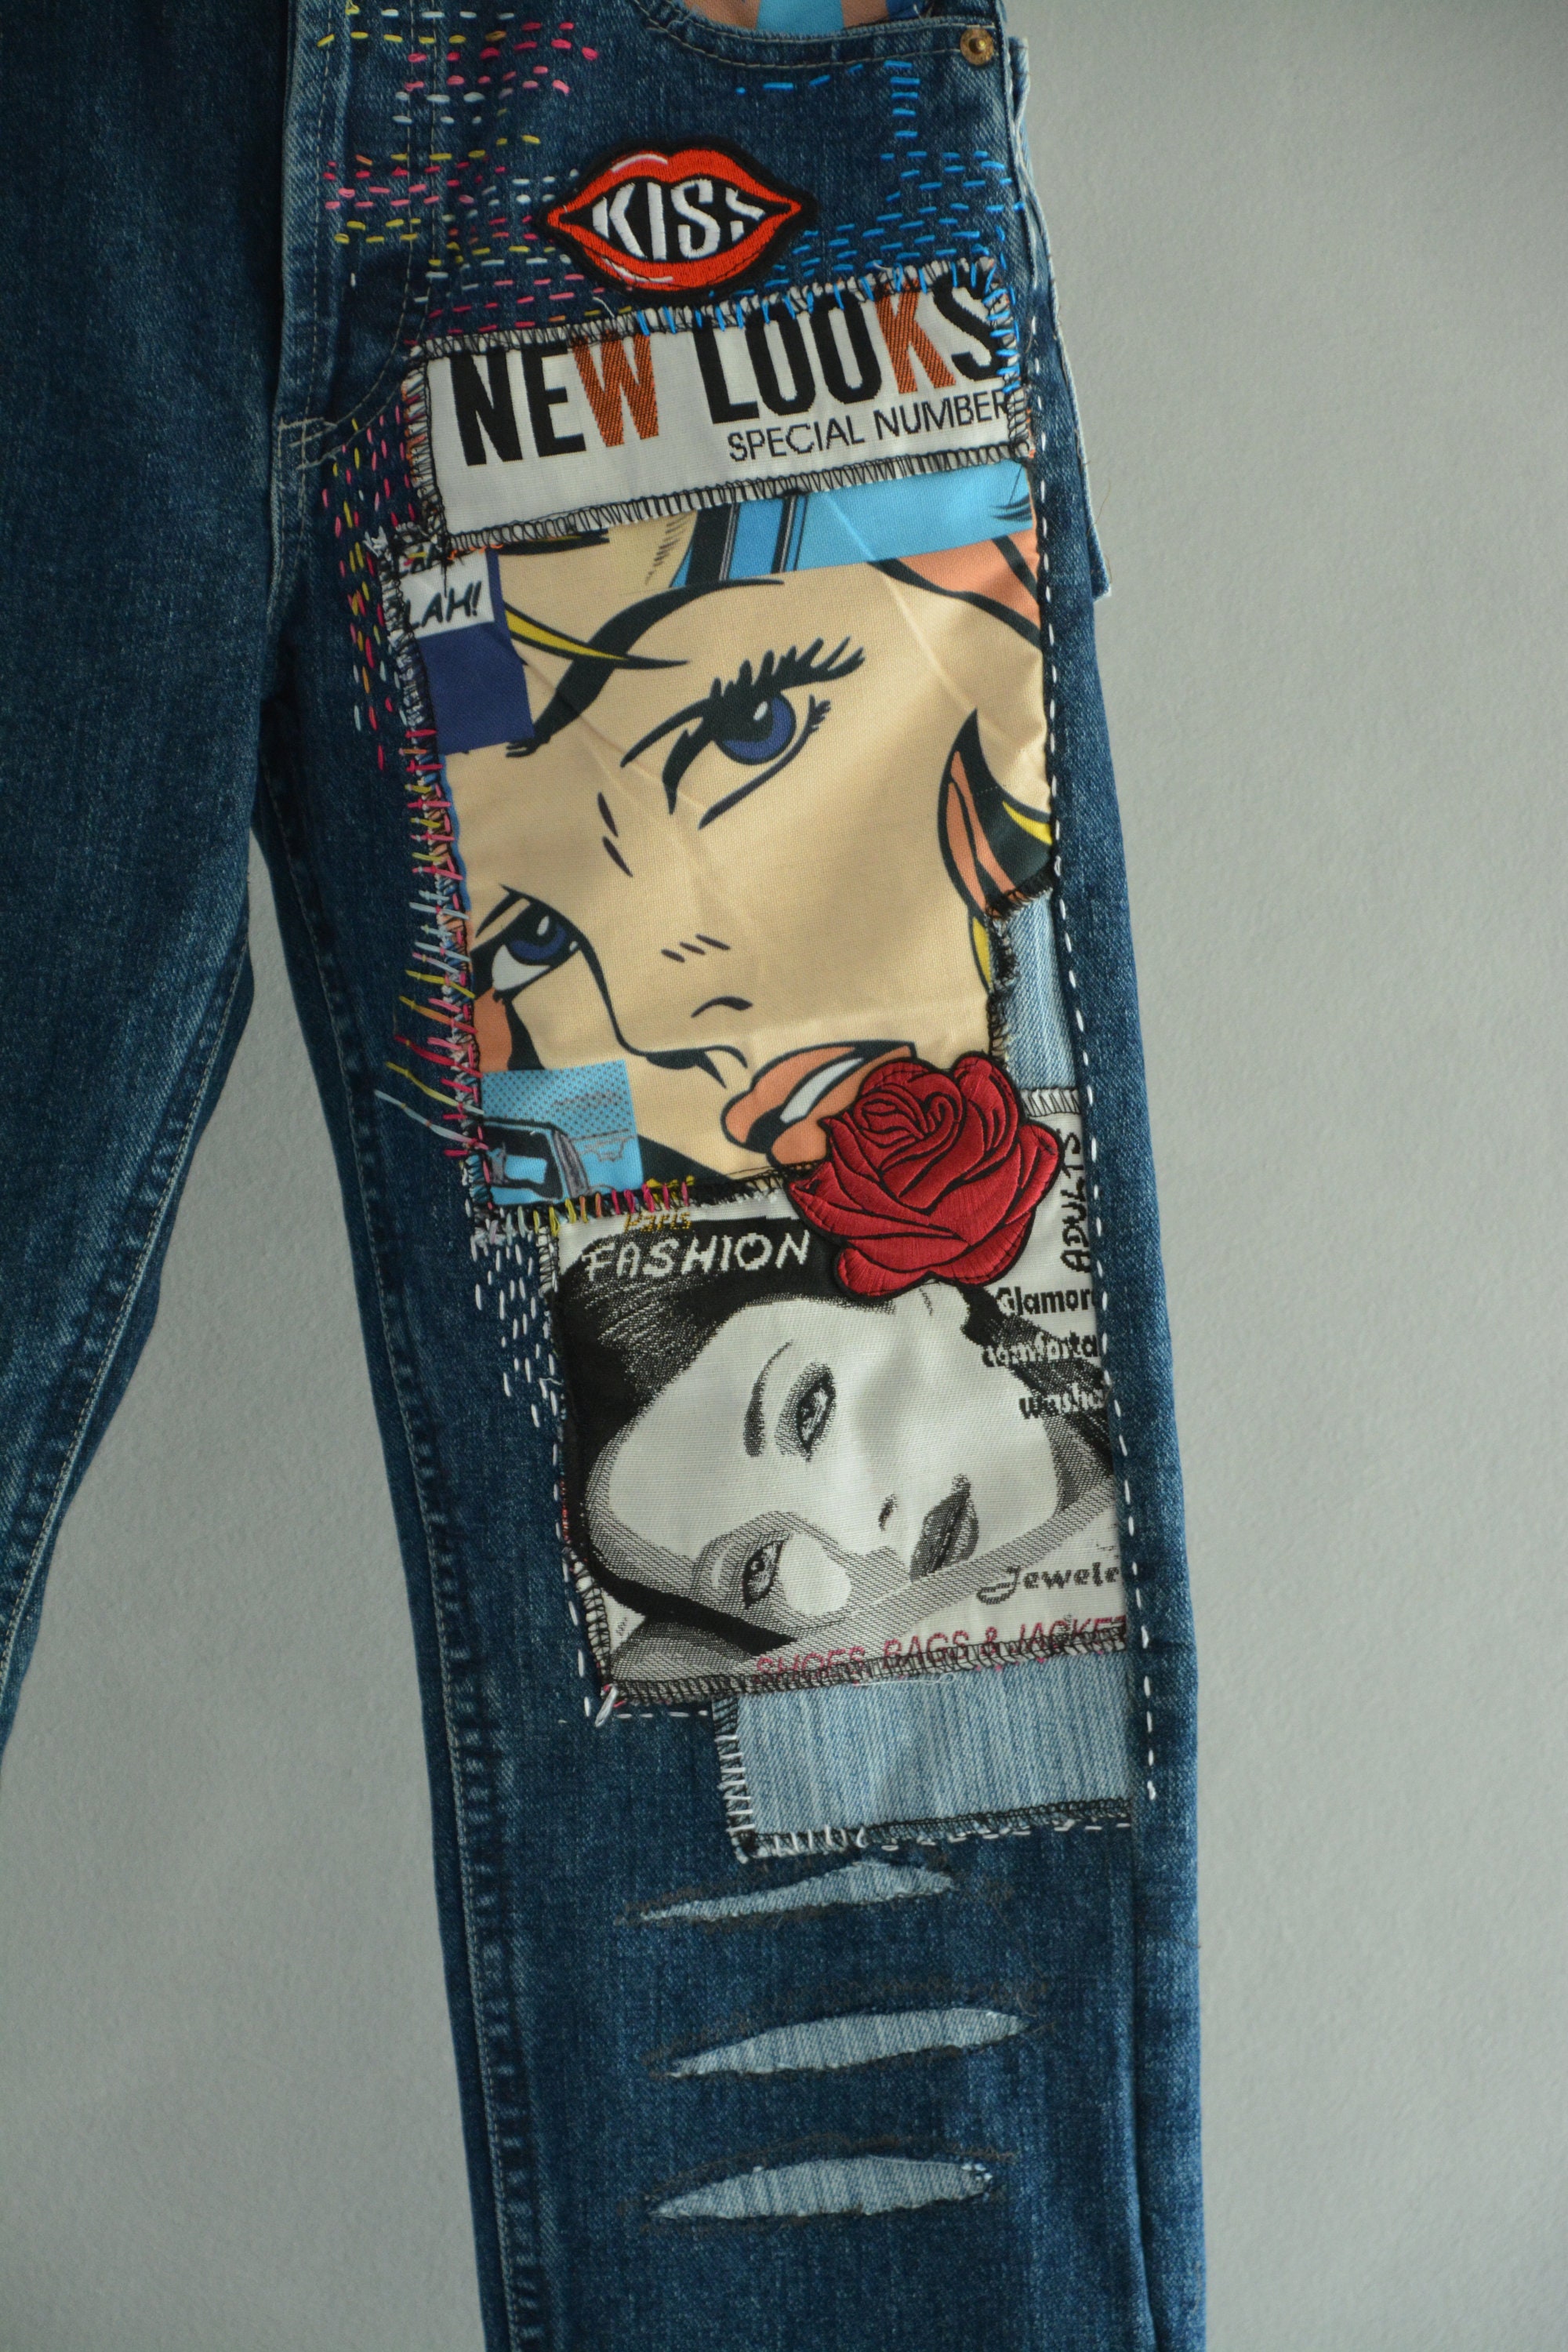 Levi's 501 Vintage High Waist Denim Jeans Medium Blue Wash | Etsy